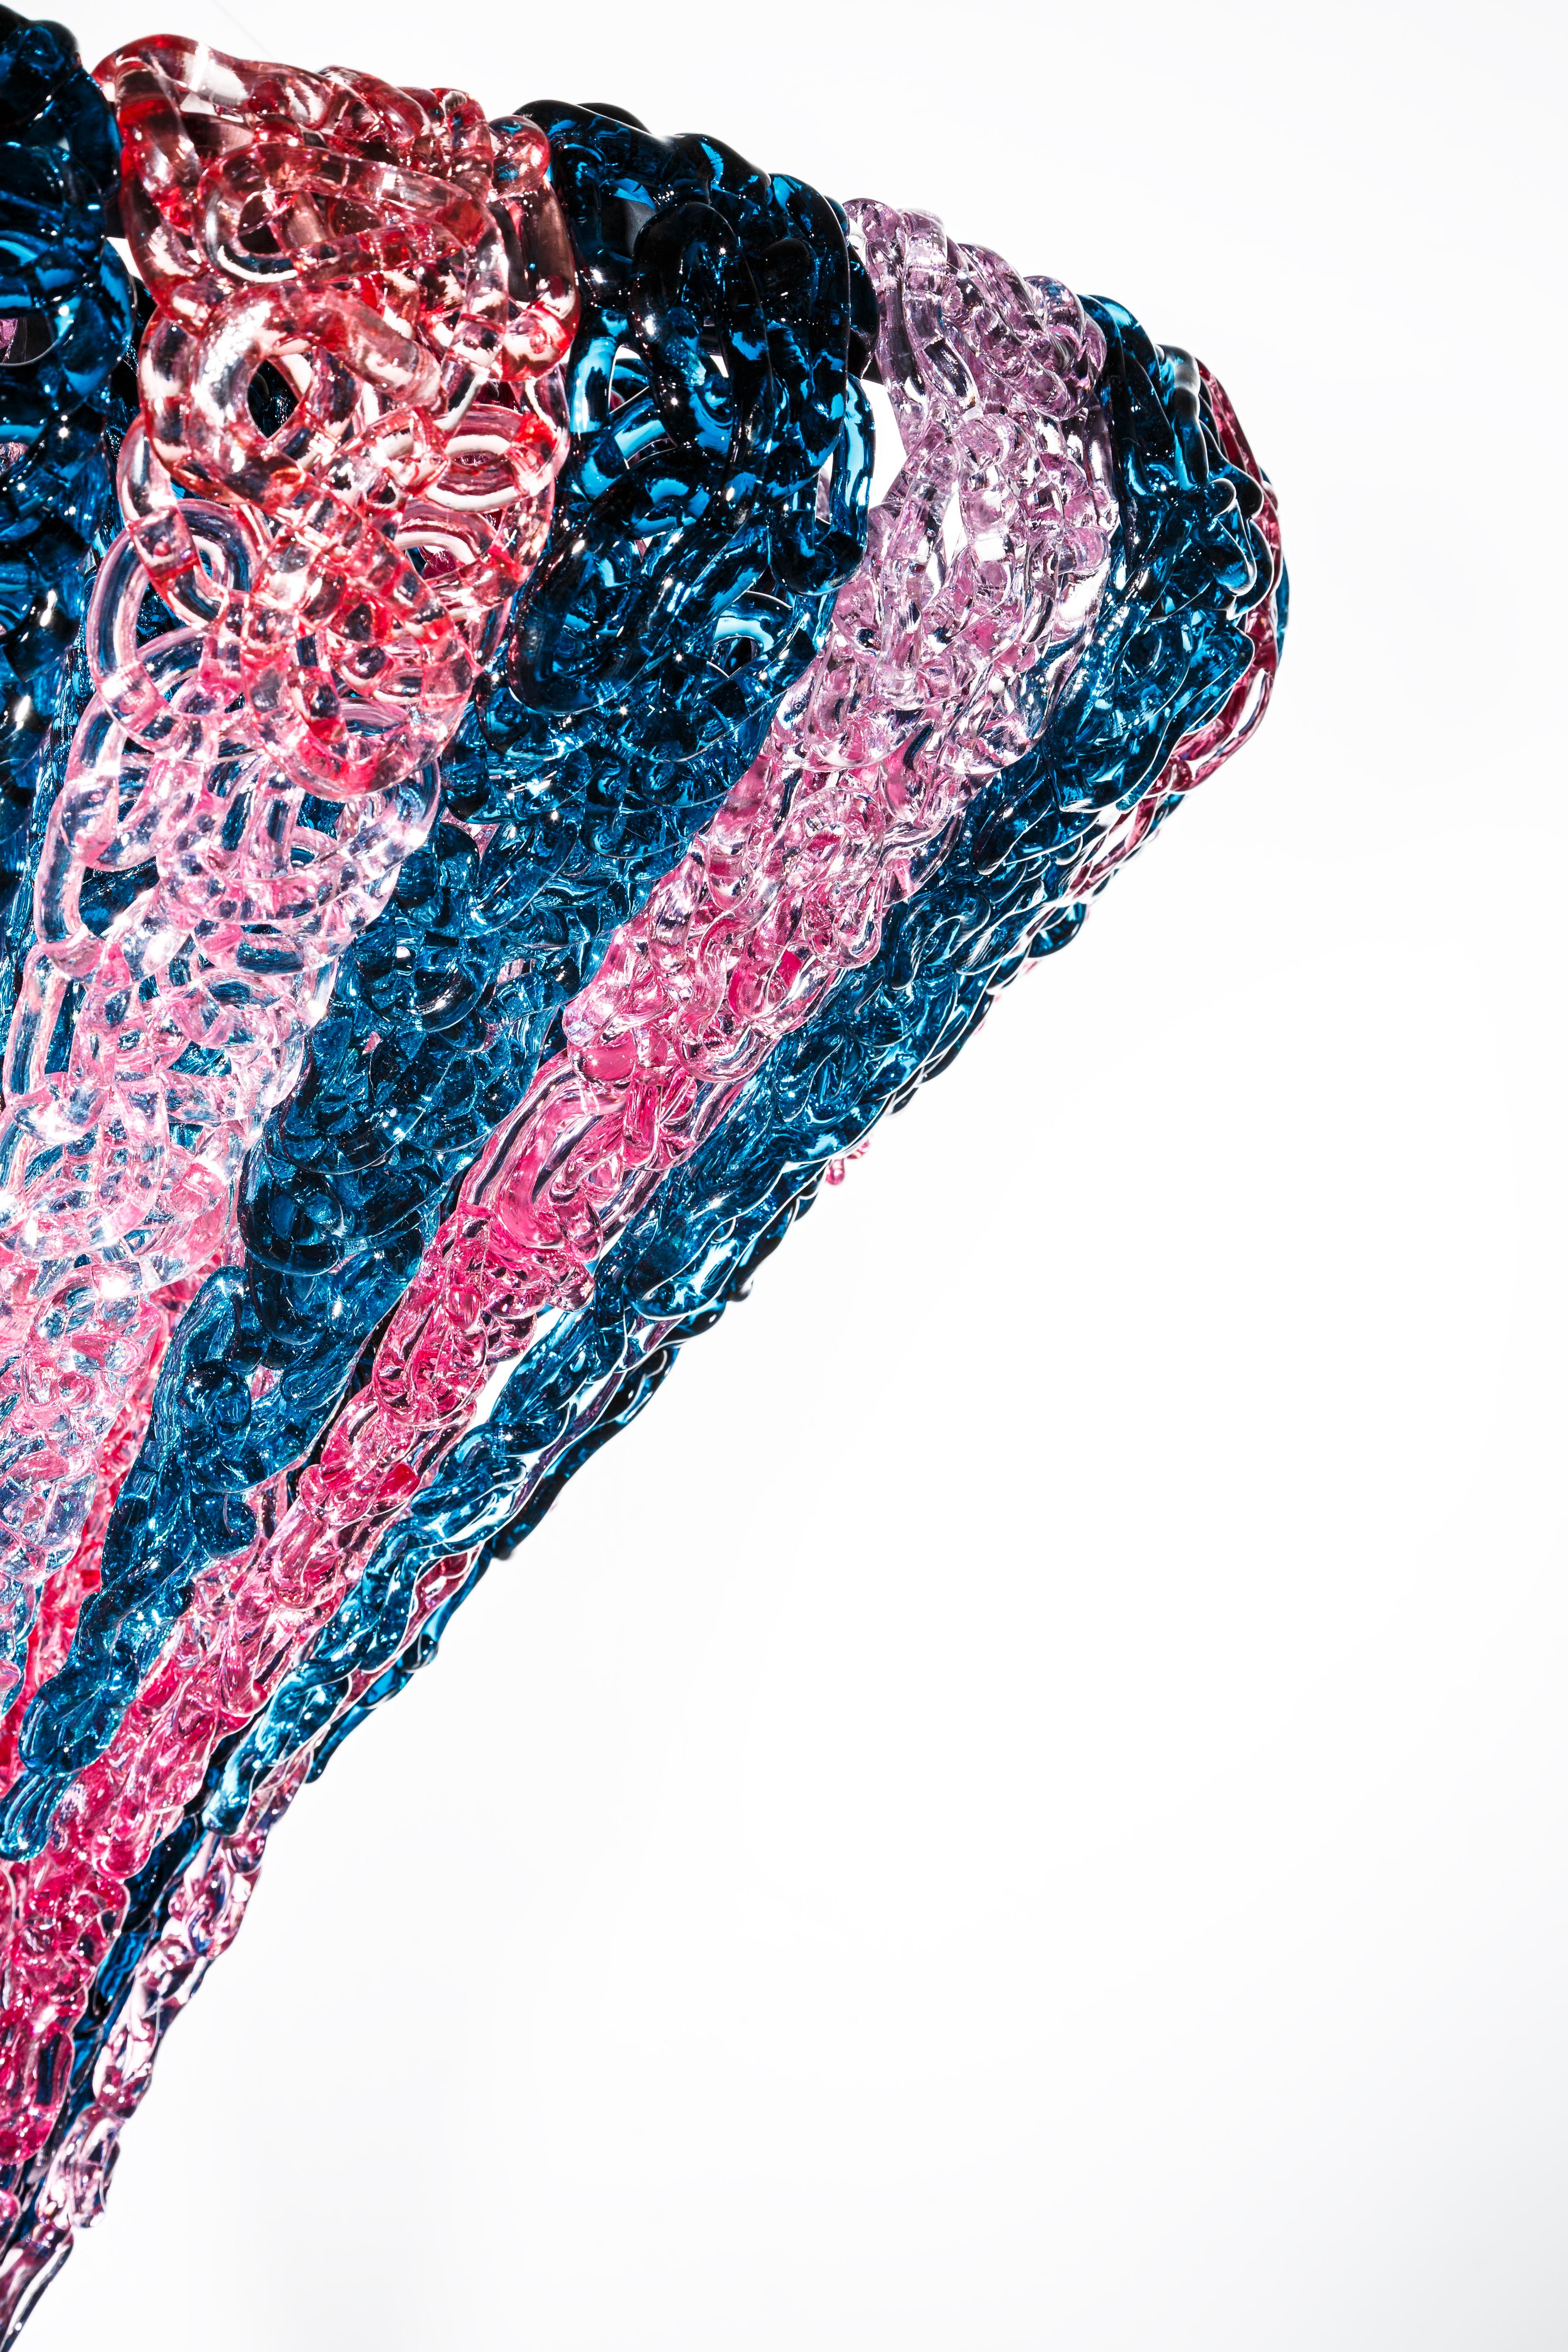 Contemporary Vertigo Chandelier in custom pastel colors by Jacopo Foggini For Sale